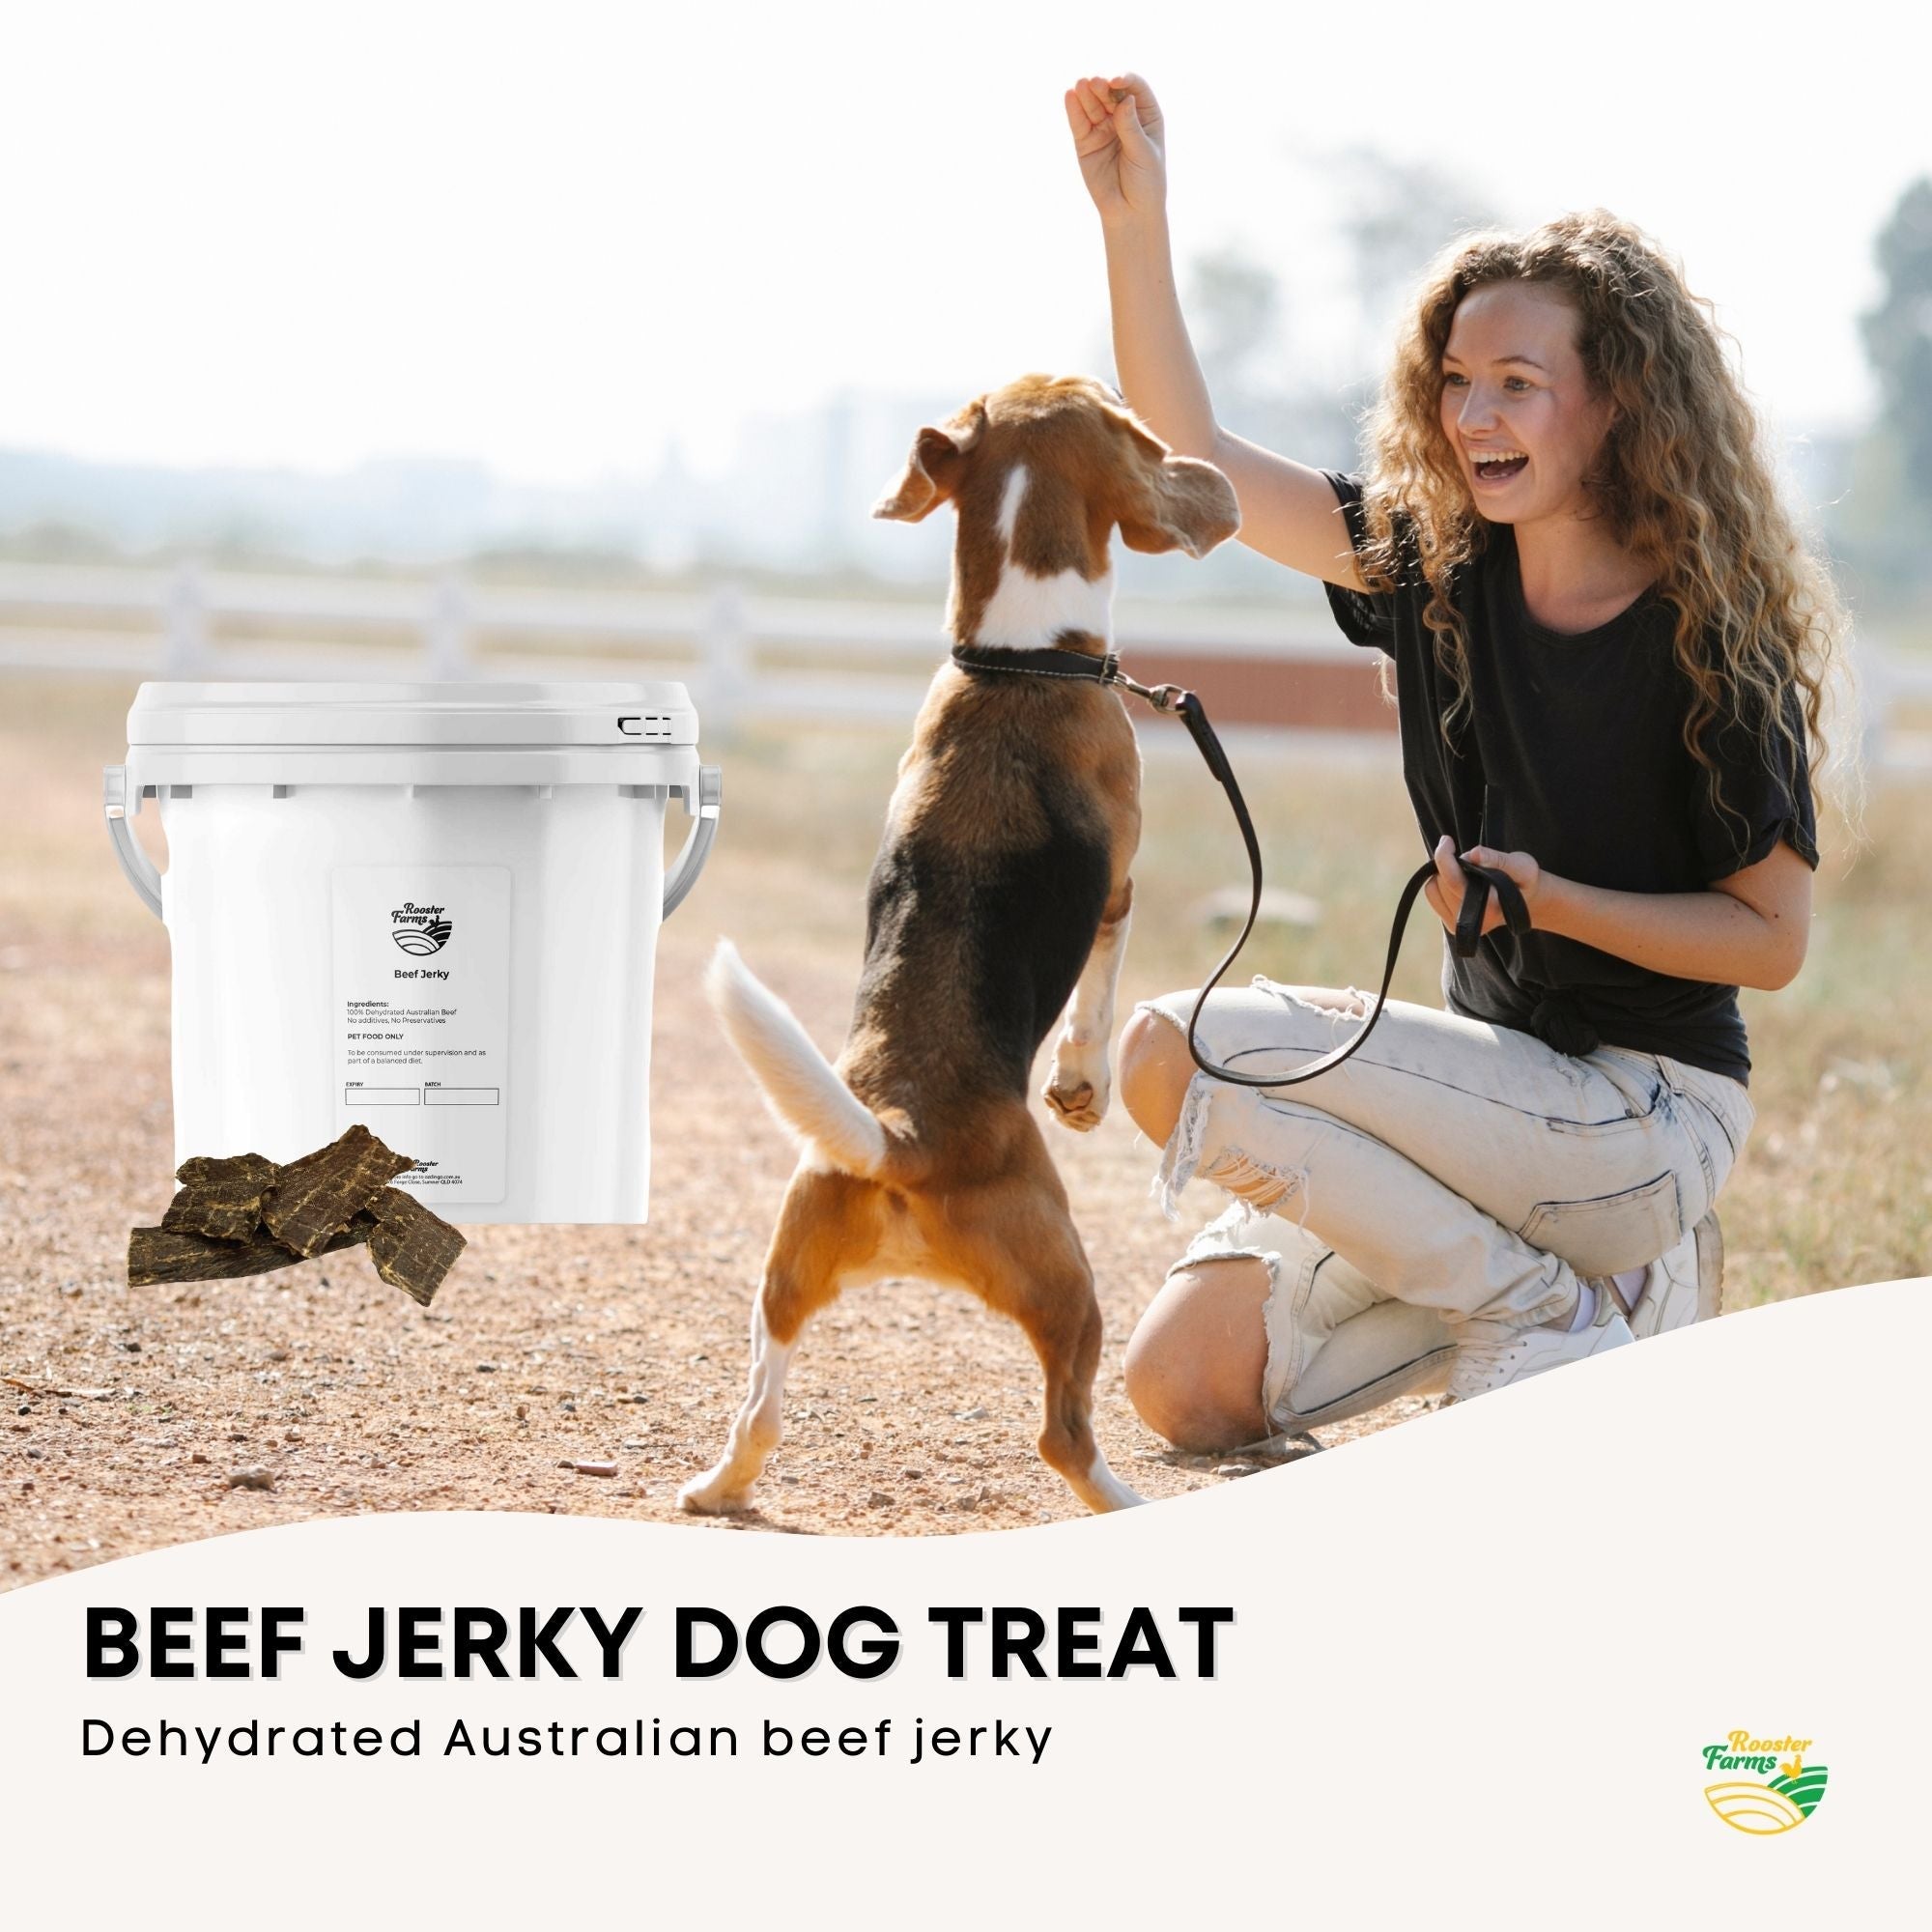 700g Dog Treat Beef Jerky Bucket - Dehydrated Australian Healthy Puppy Chew